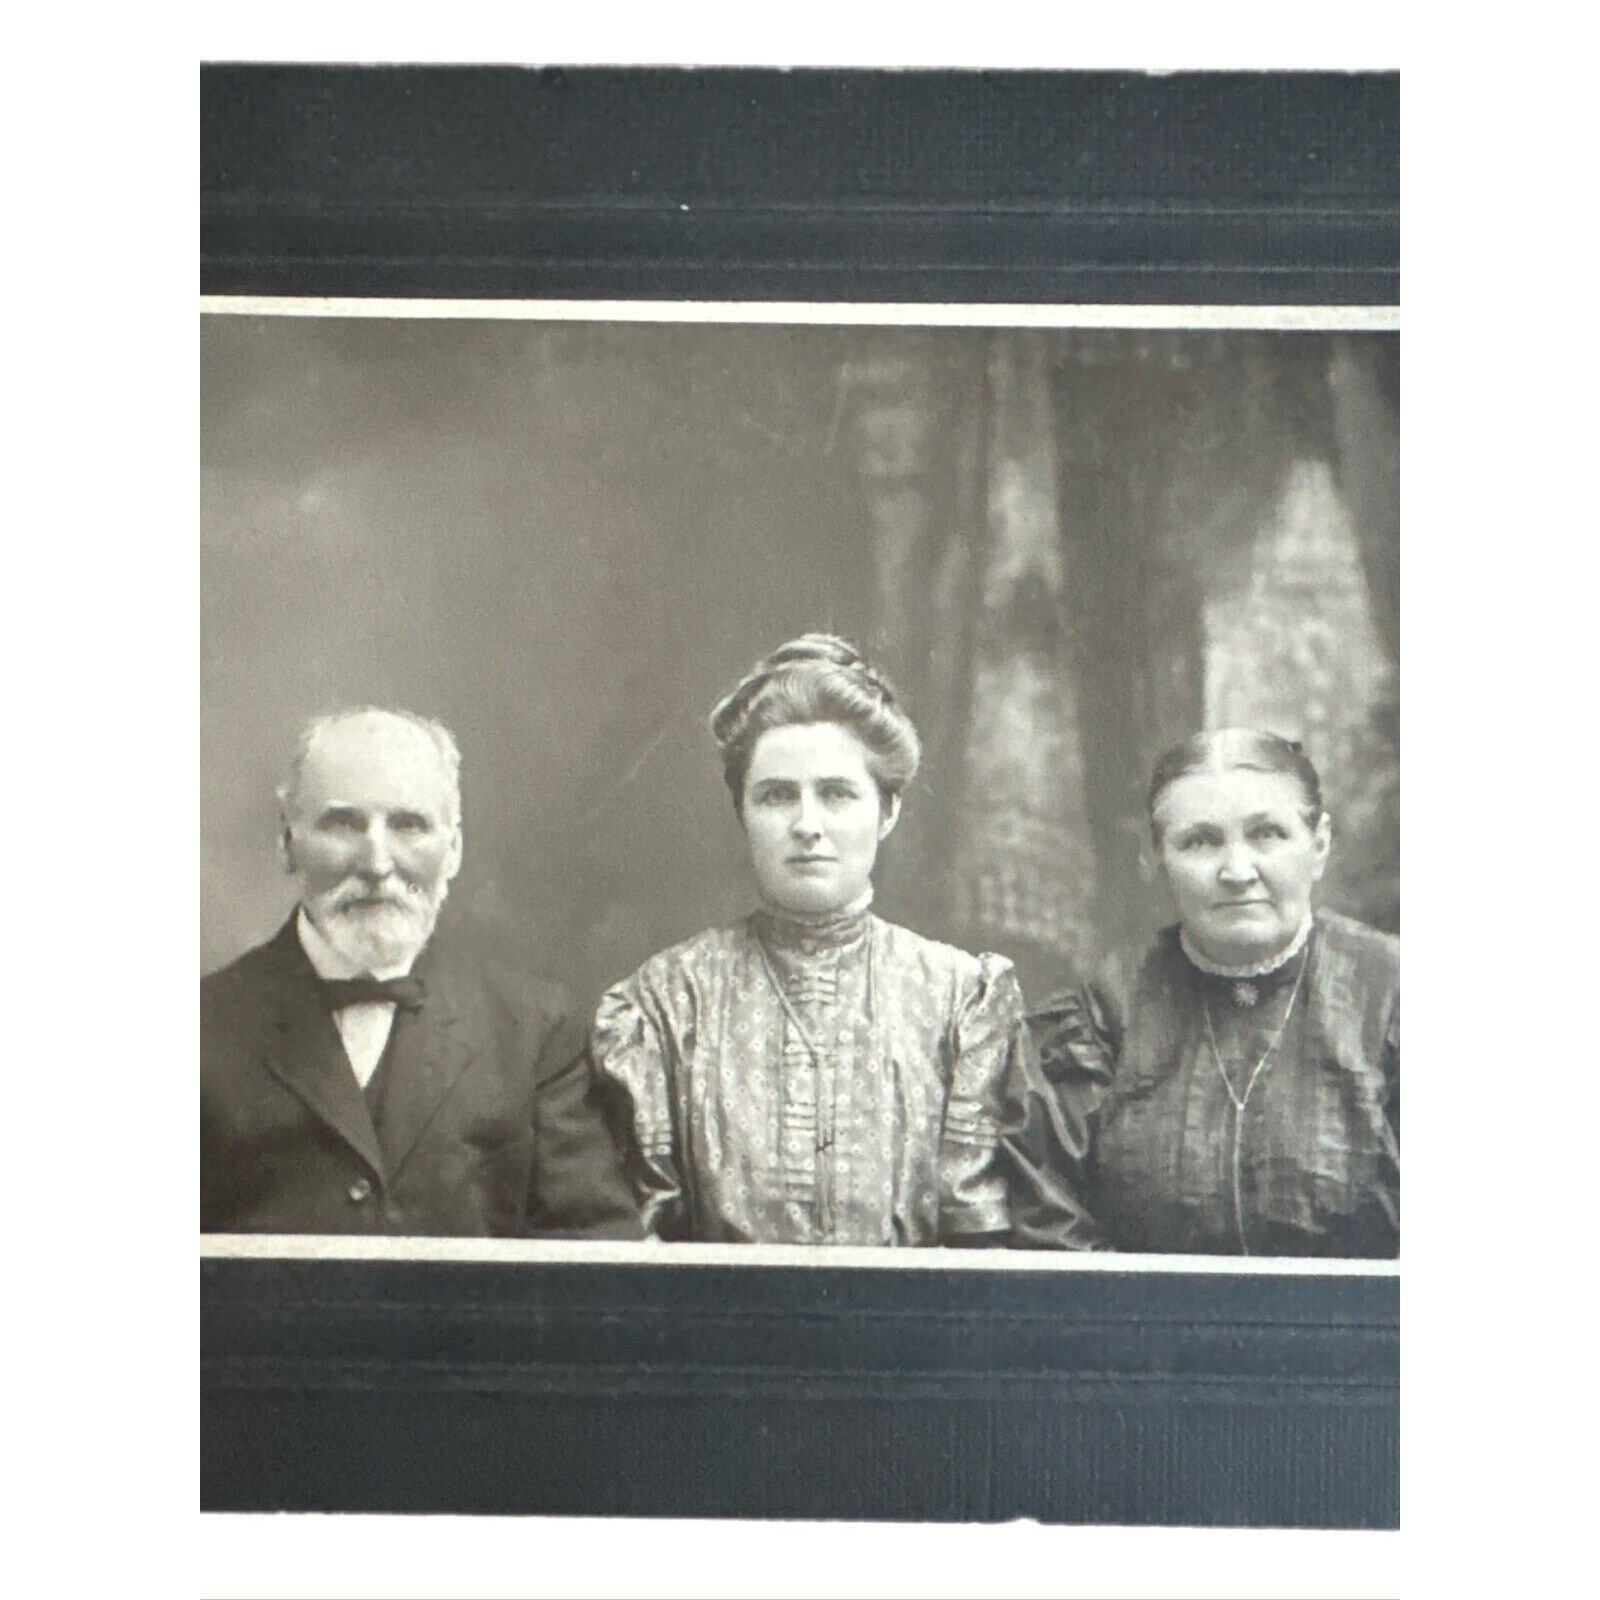 Antique Photograph Cabinet Card Ephemera B/W Unsigned Family Portrait 3 People